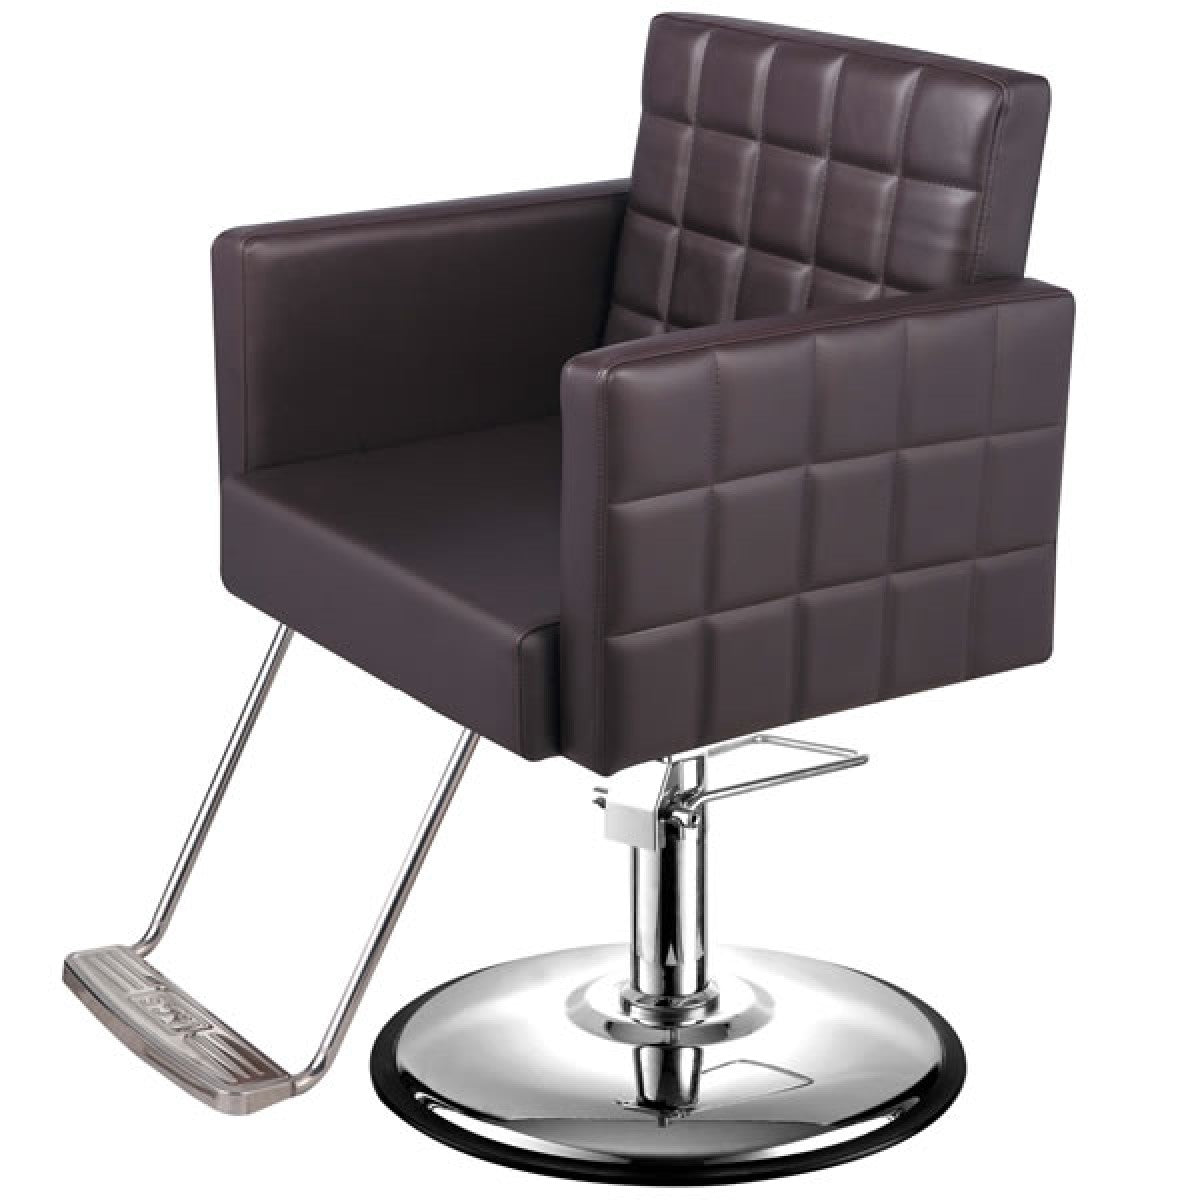 MOSAIC Salon Styling Chair